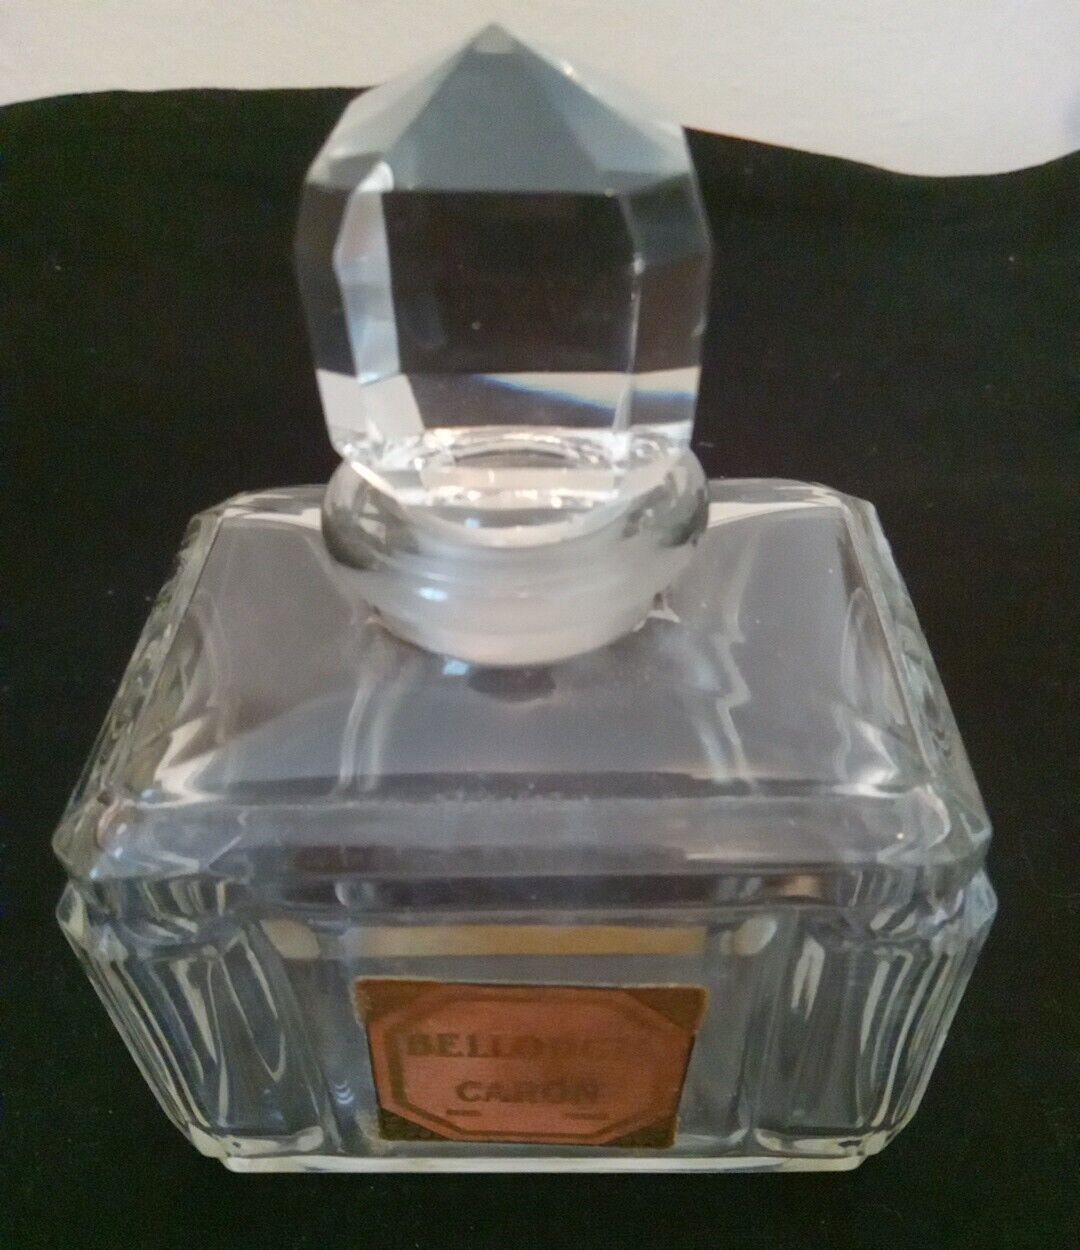 Vintage Bellodgia Caron Perfume Bottle Paris France, Circa 1920s-1930s Baccarat?